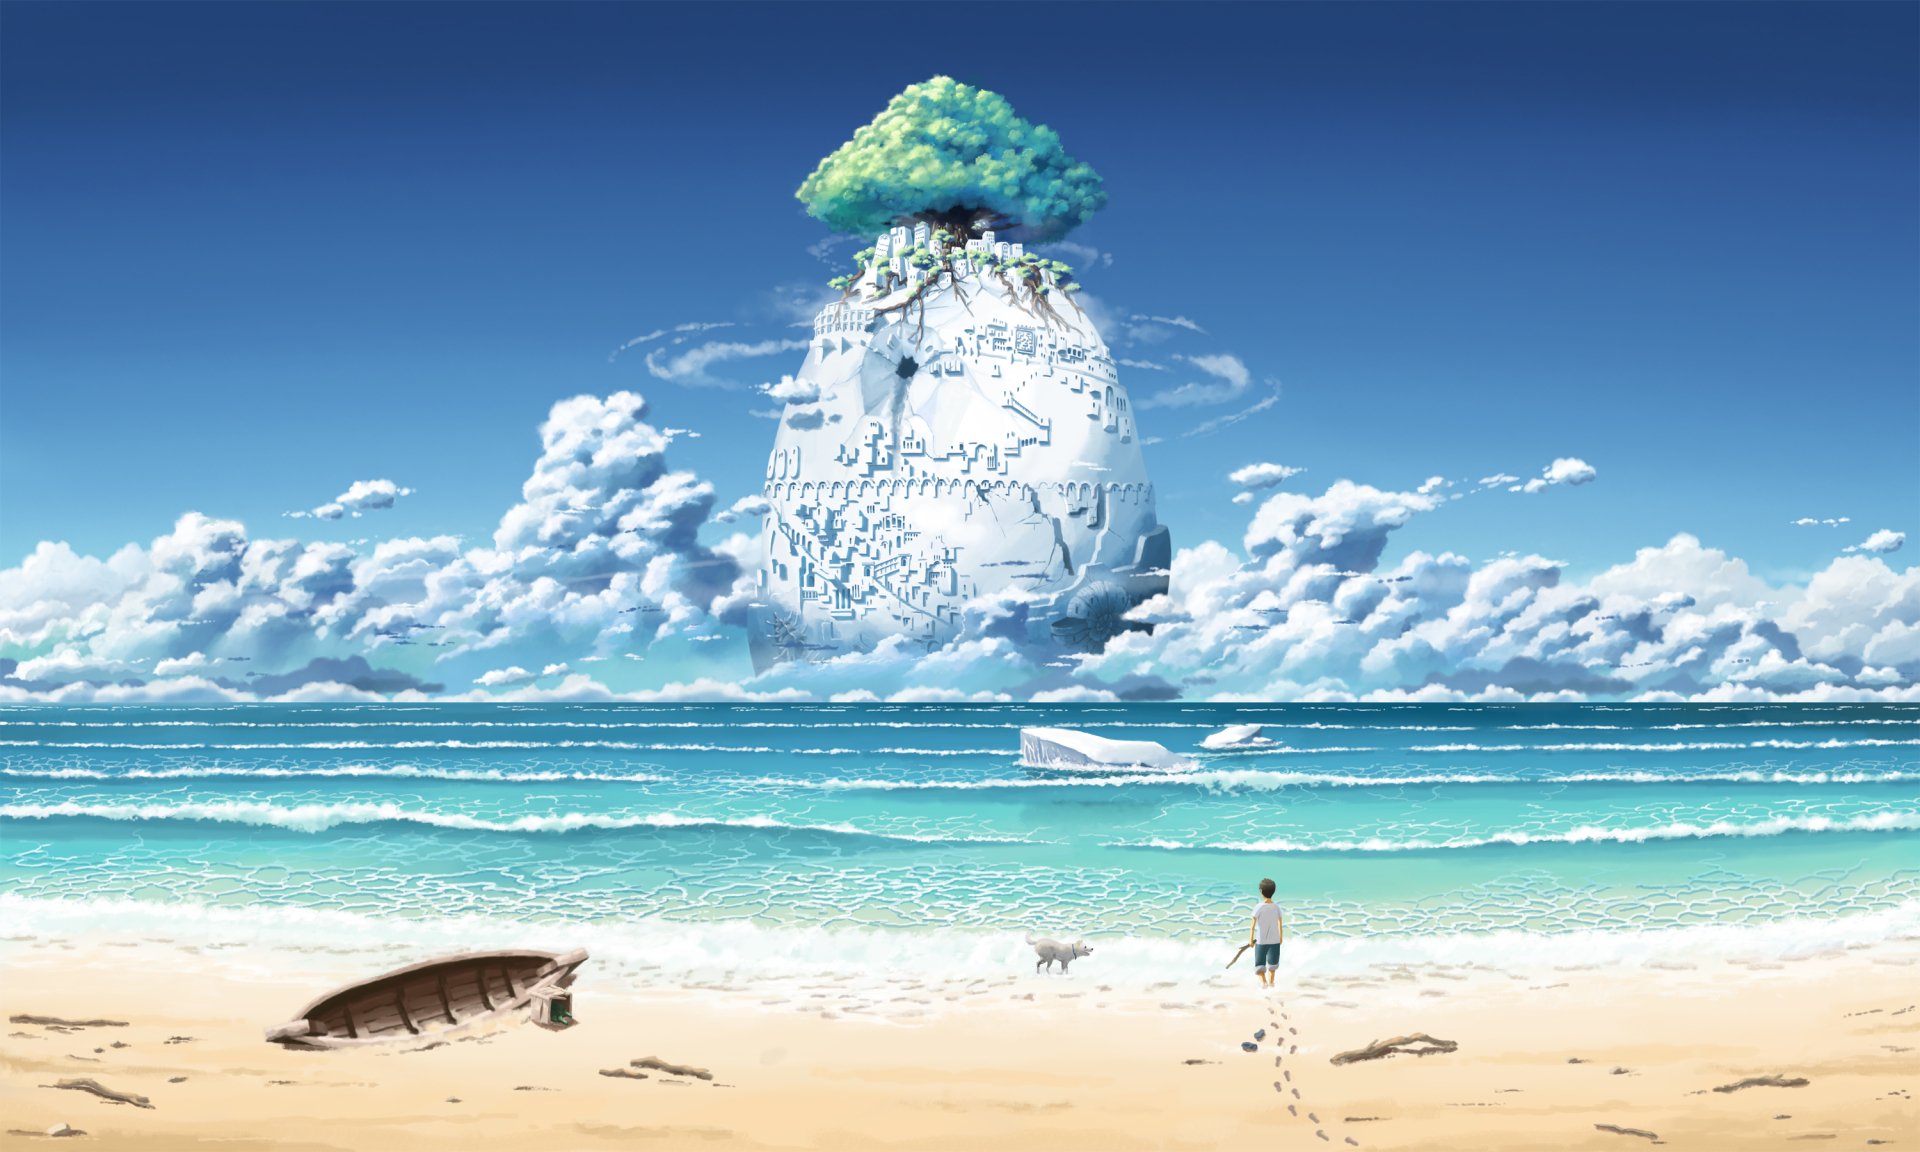 Anime Beach Episode OVA by NandoInTheBando on Amazon Music Unlimited